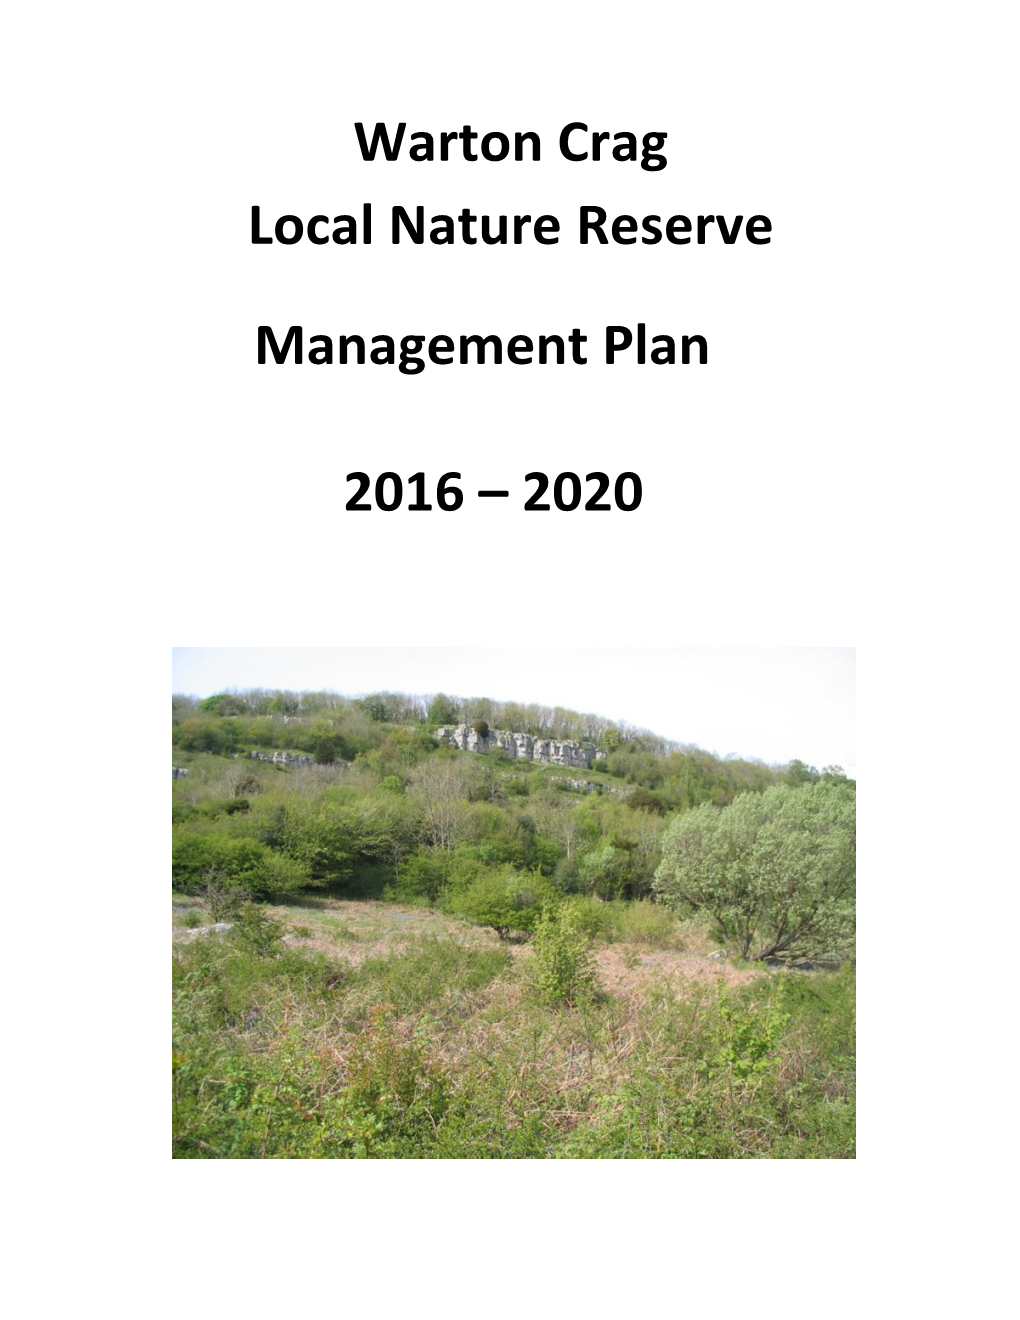 Warton Crag Local Nature Reserve Management Plan